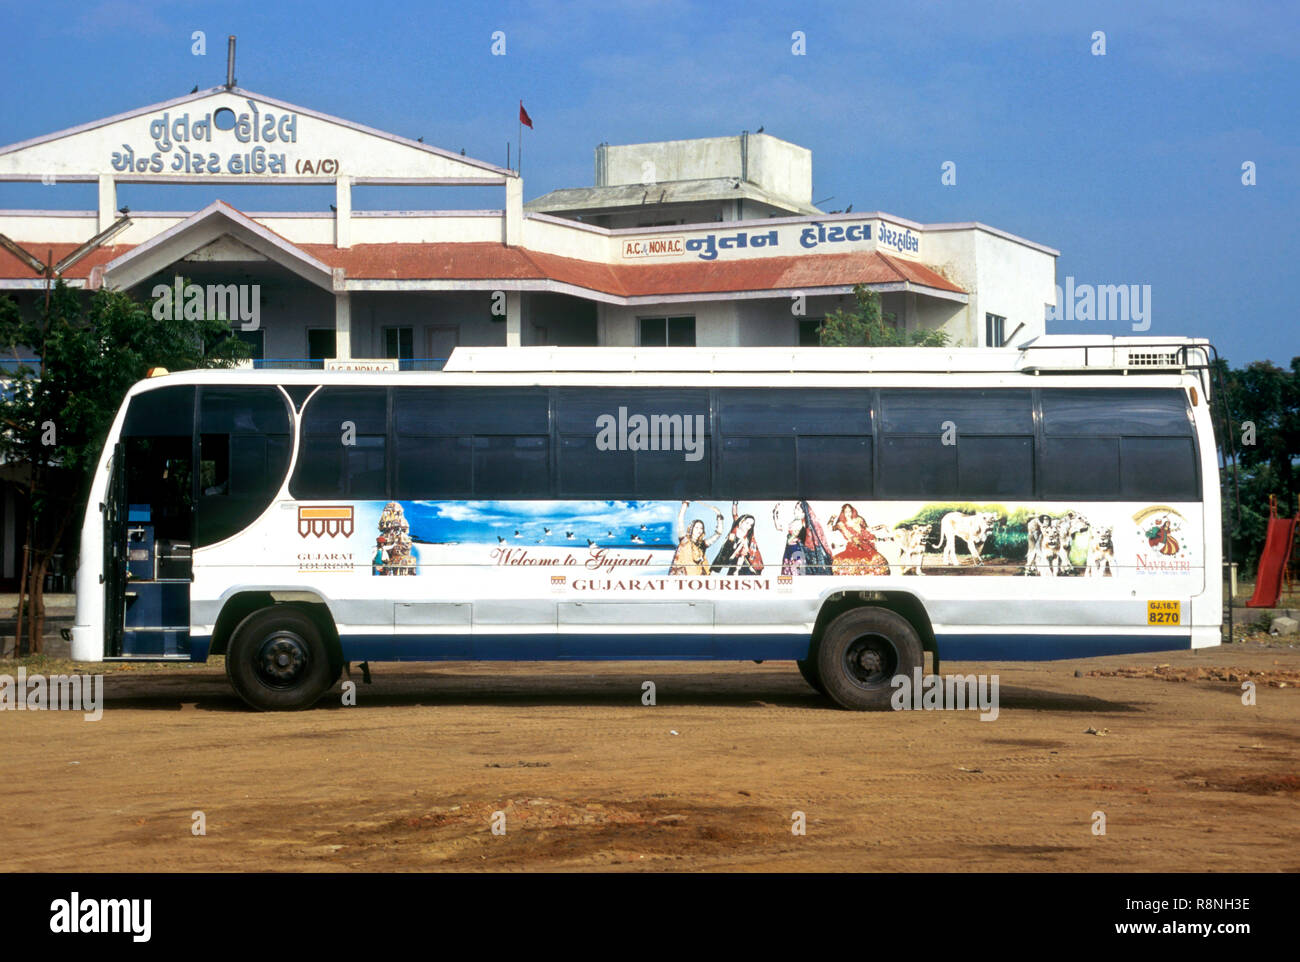 luxurious coach of gujarat tourism, ahmedabad, gujarat, india Stock Photo